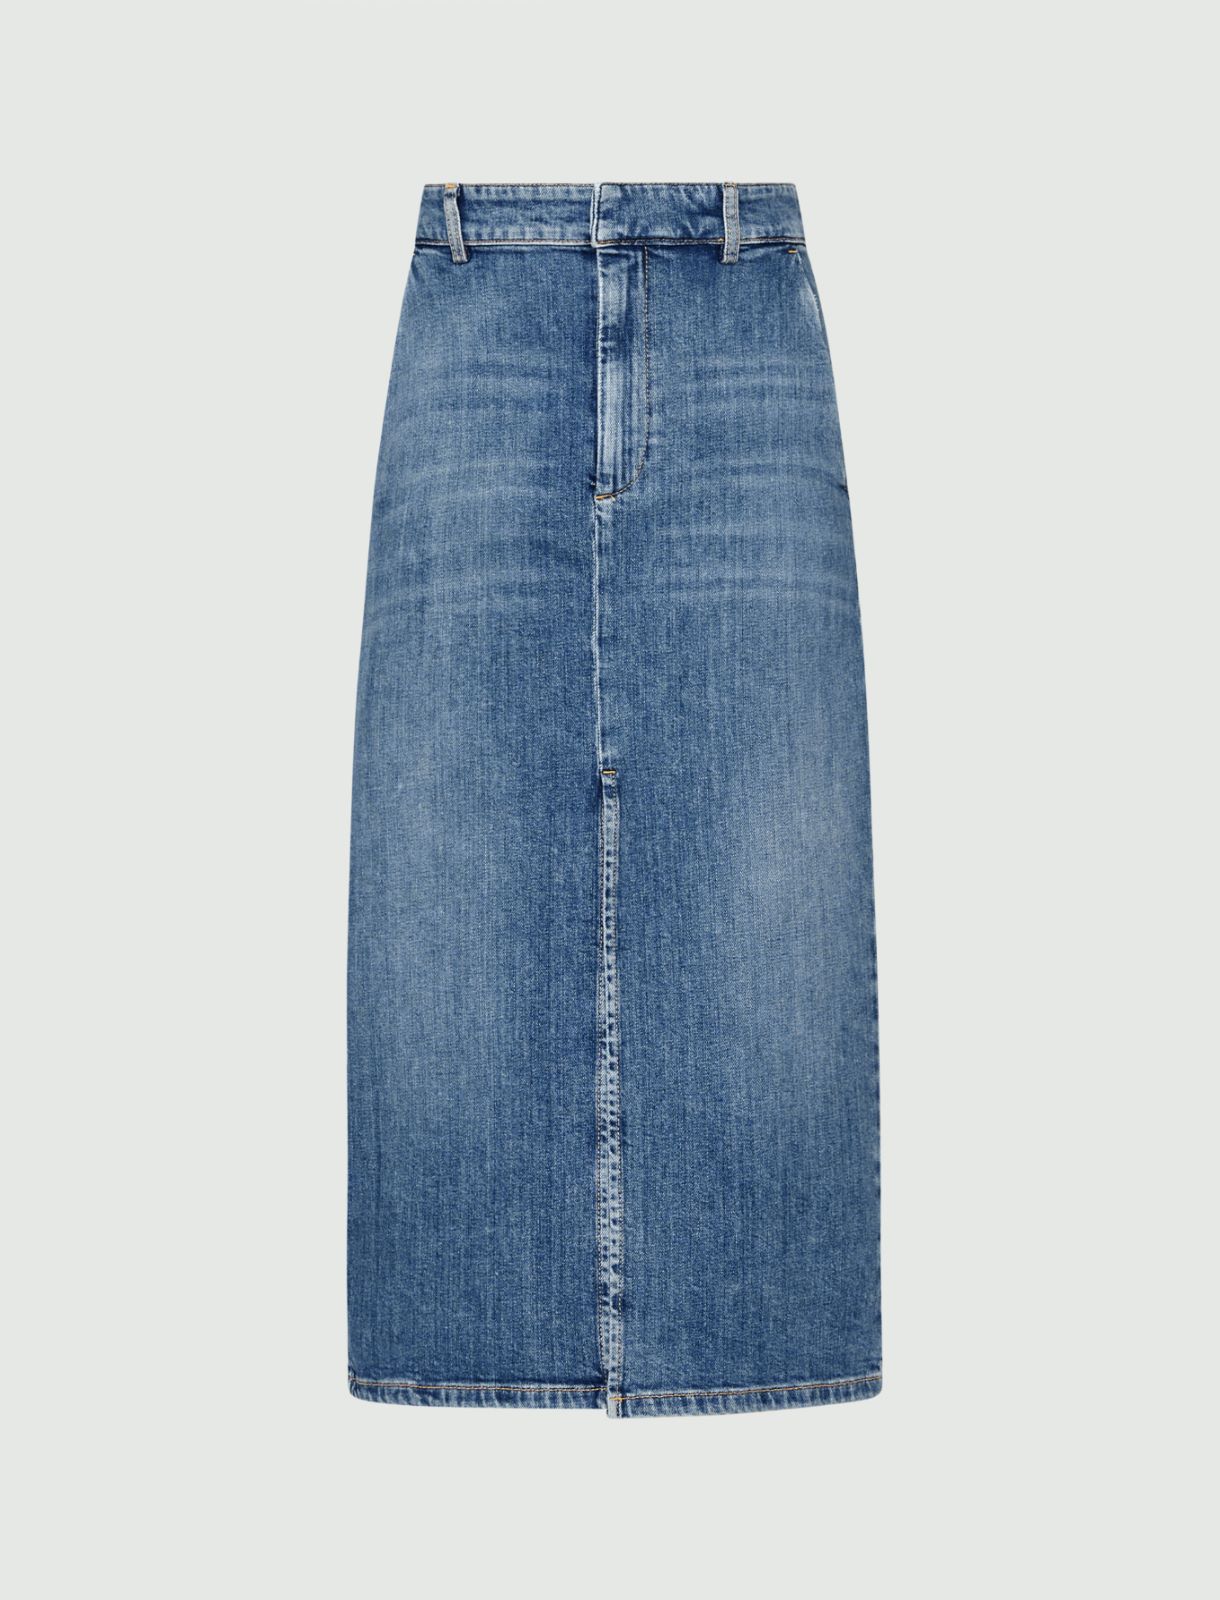 Denim skirt - Blue jeans - Marella - 5